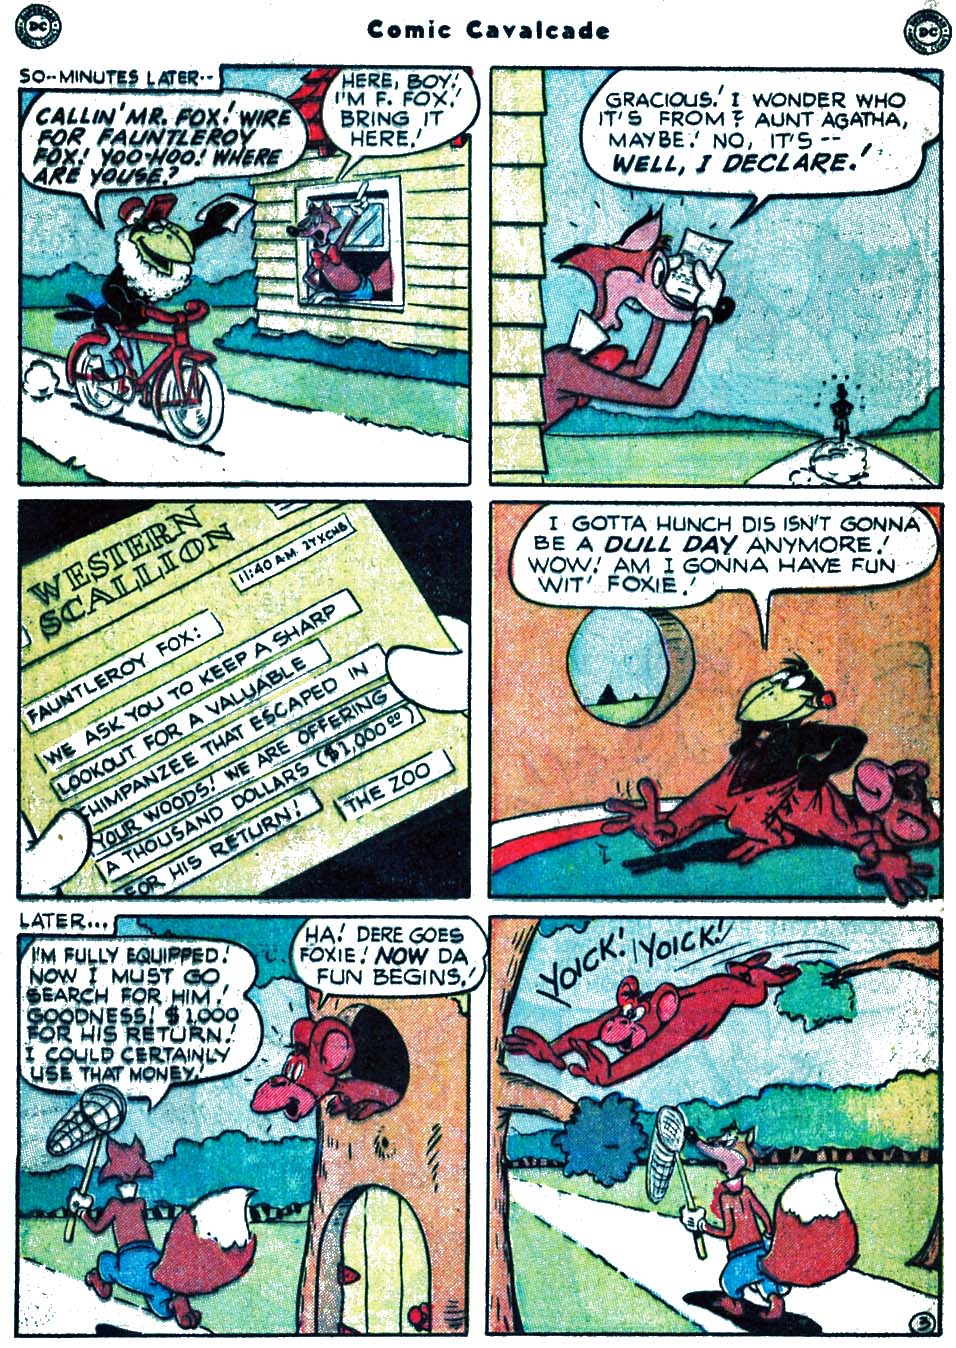 Comic Cavalcade issue 42 - Page 5